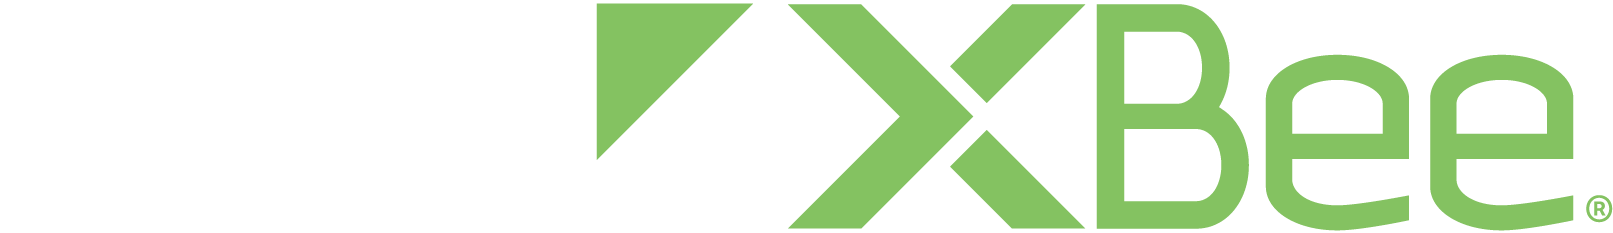 Digi XBee Logo